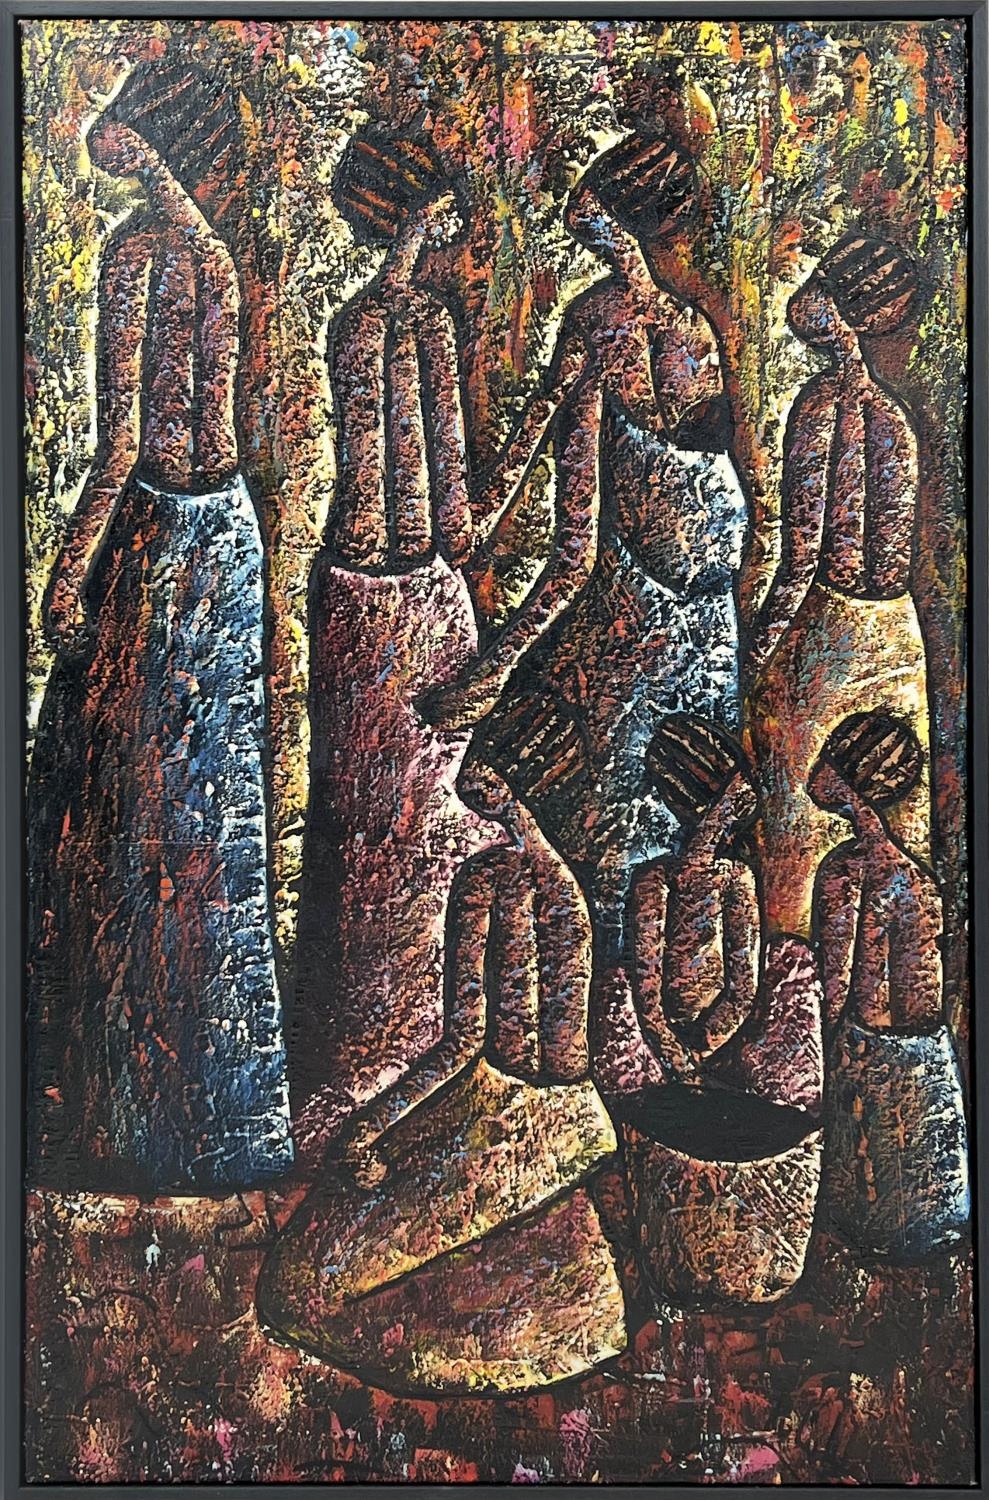 PAULO KAPELA (1947-2020, Angola), Female Figures, oil on canvas, 89cm x 58cm, framed.